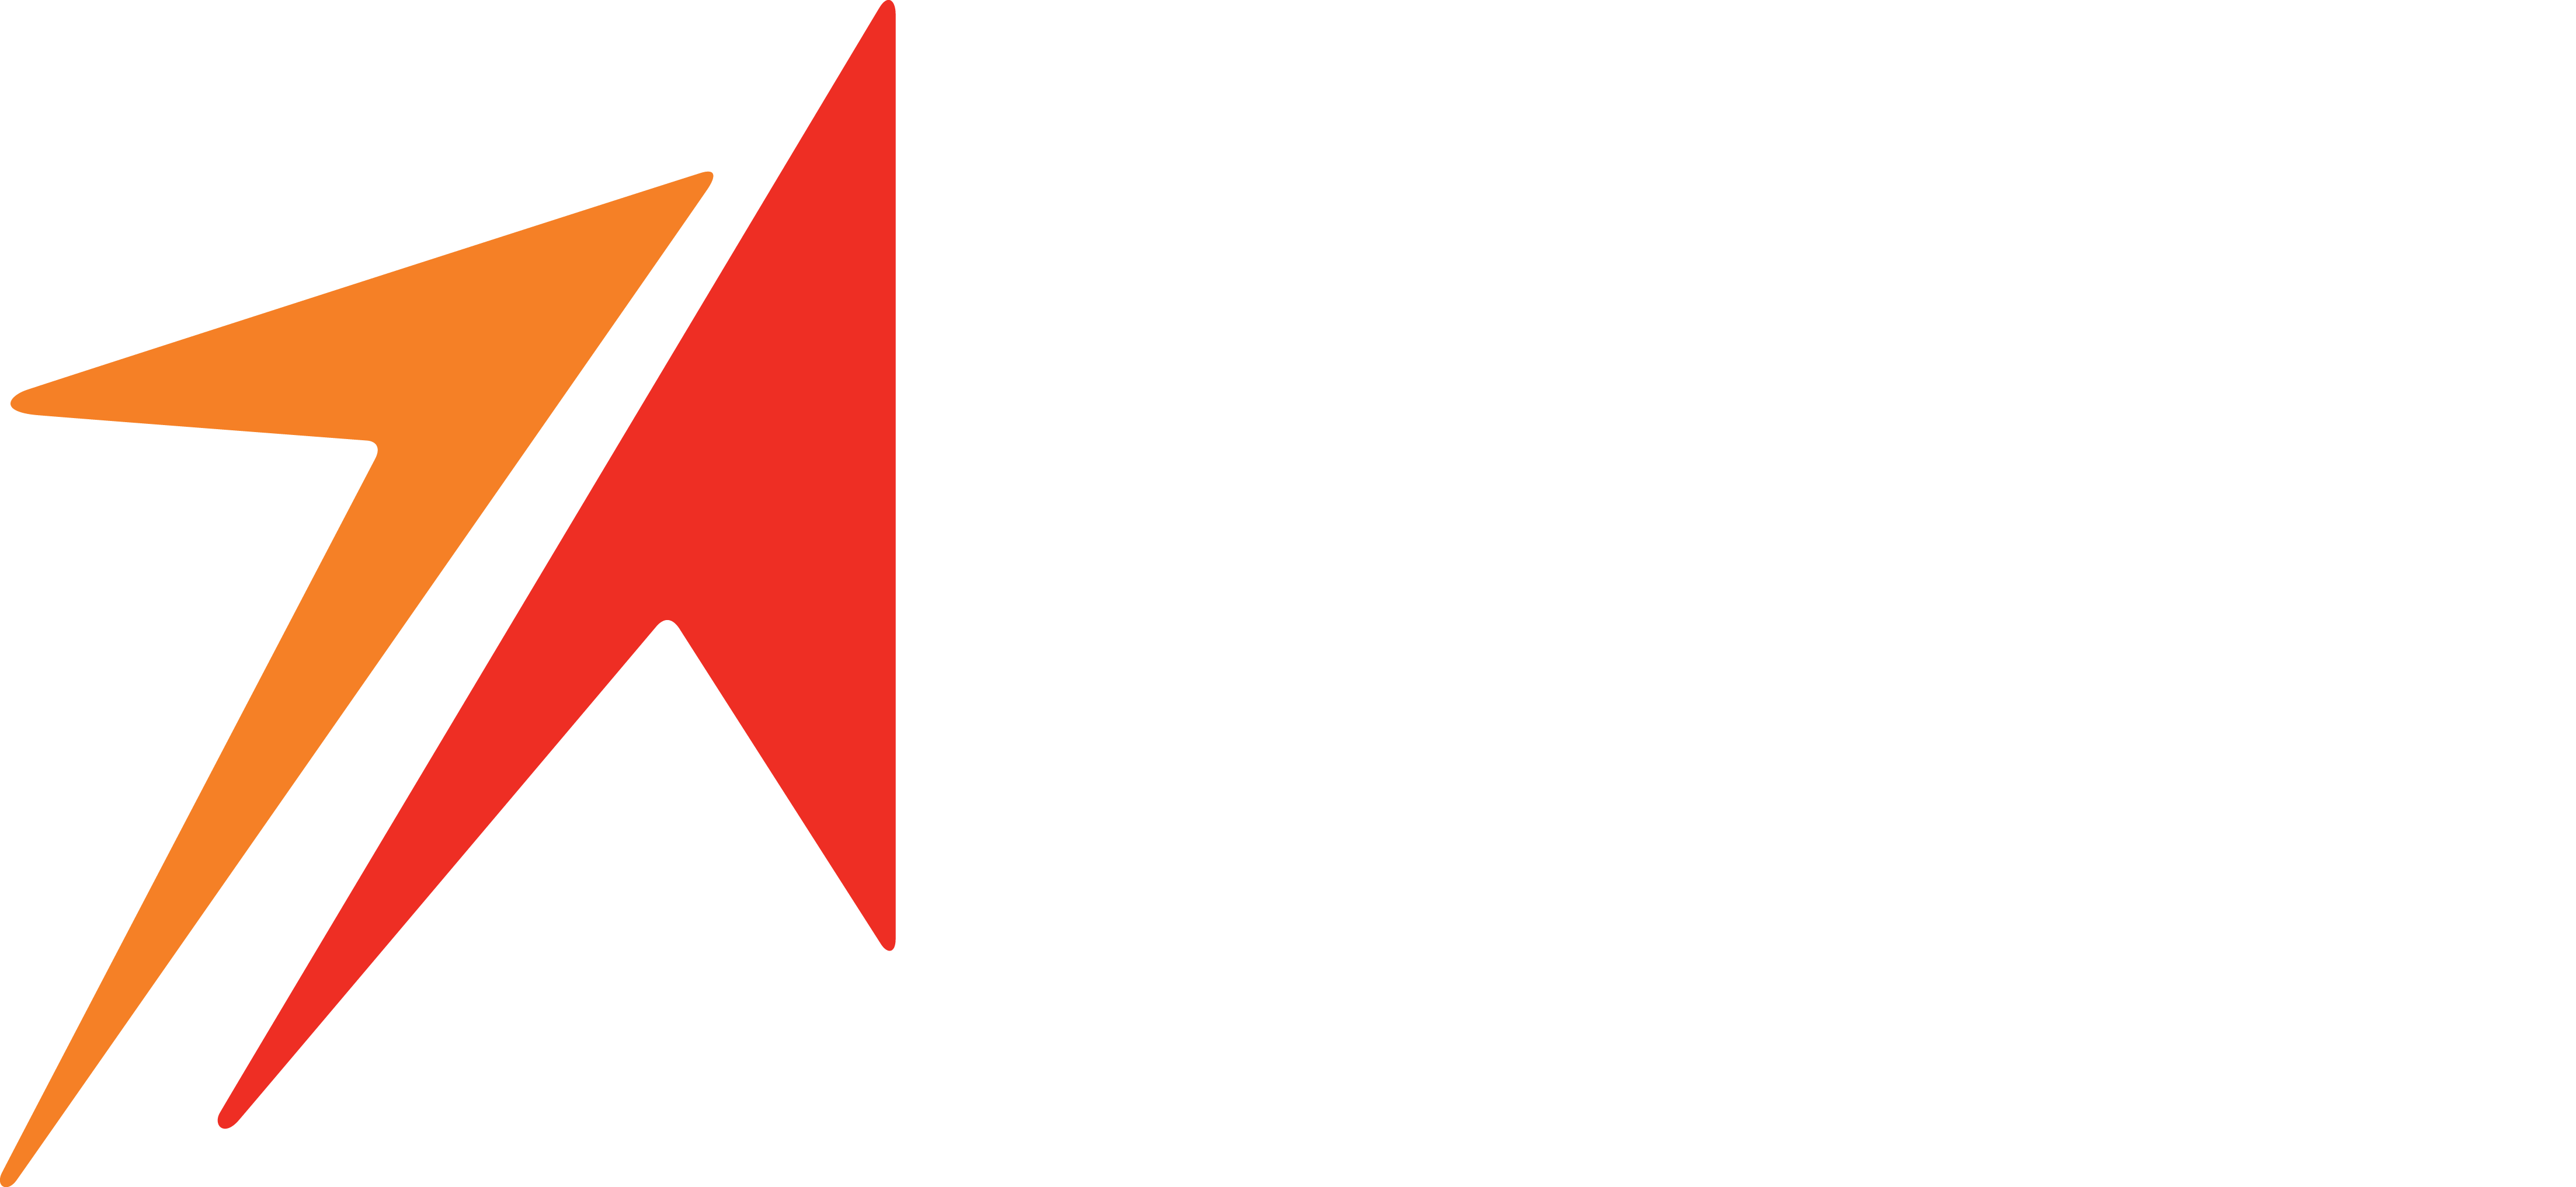 Red Travel Logo - Travel Agency Network | Travel Leaders Network